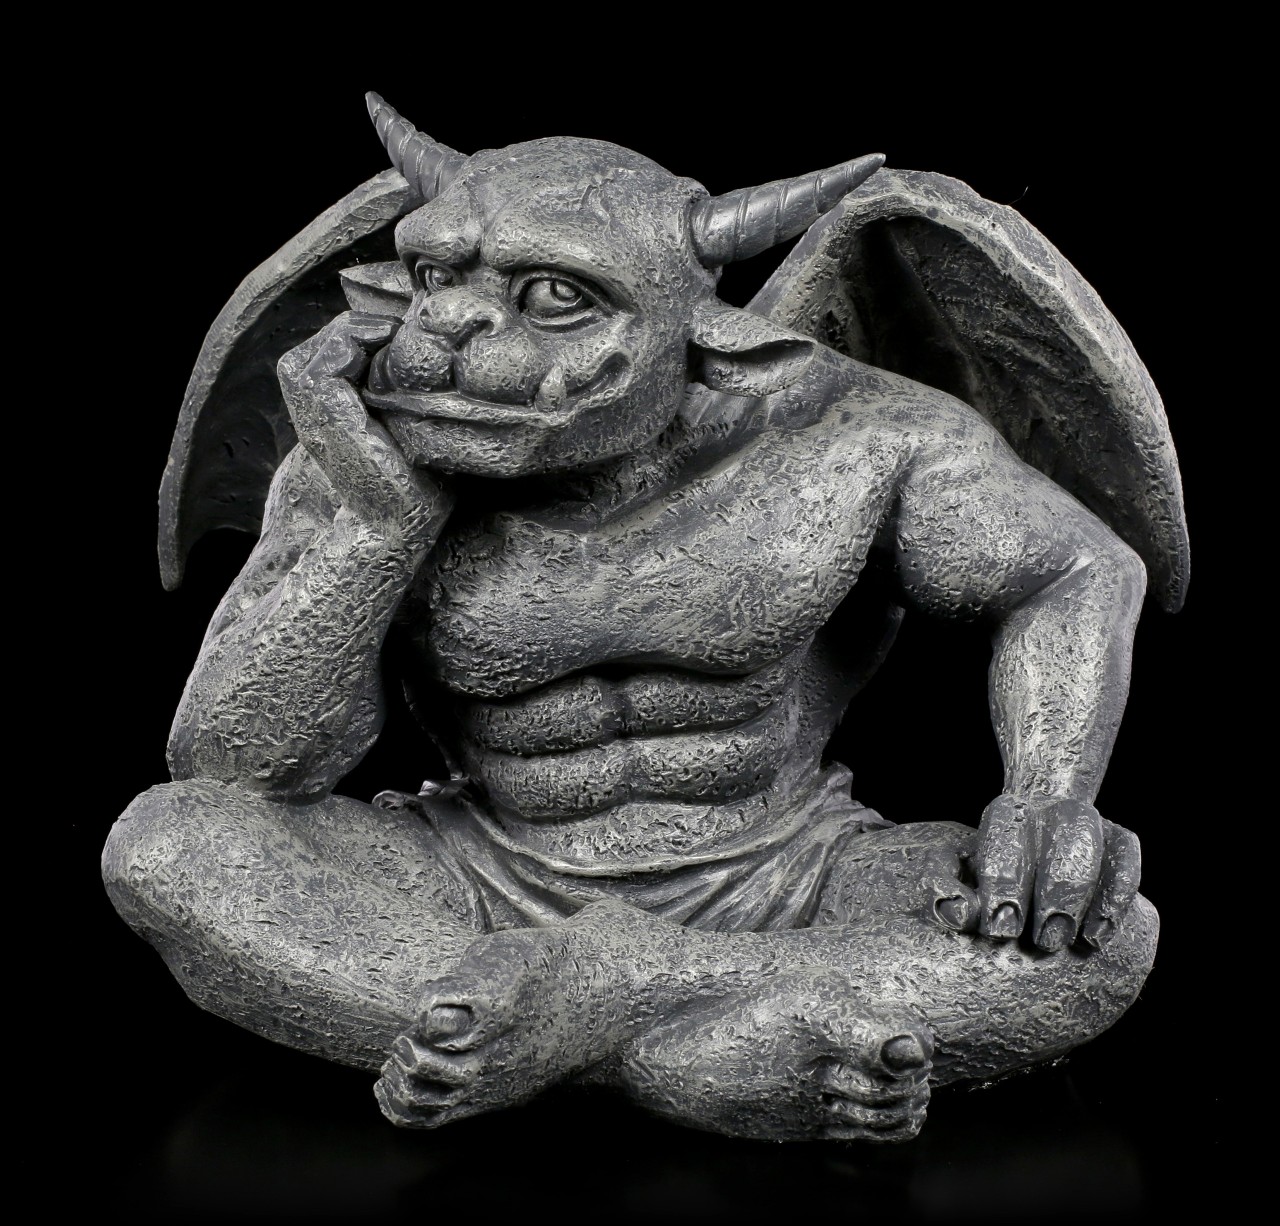 Gargoyle Figurine - Waiting for the Infinity